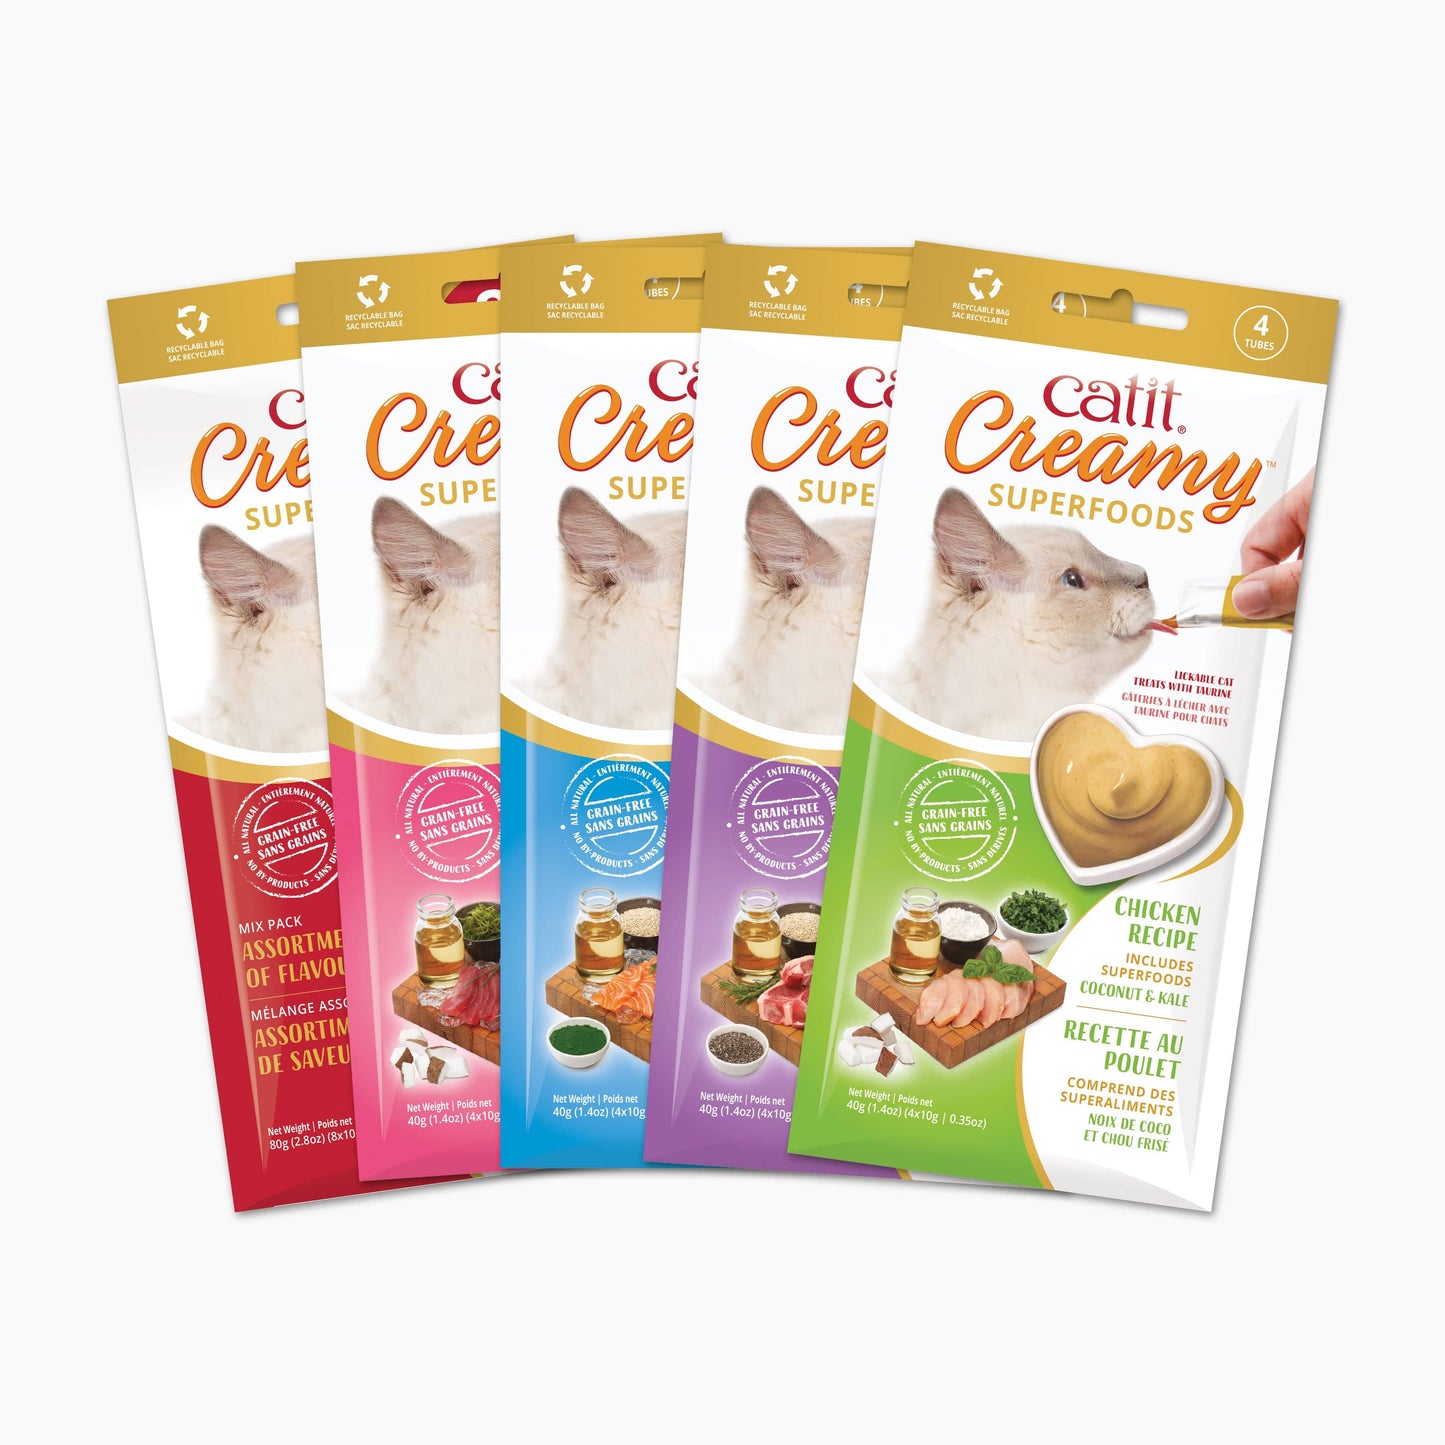 Catit Creamy Superfood Treats - 8 pack